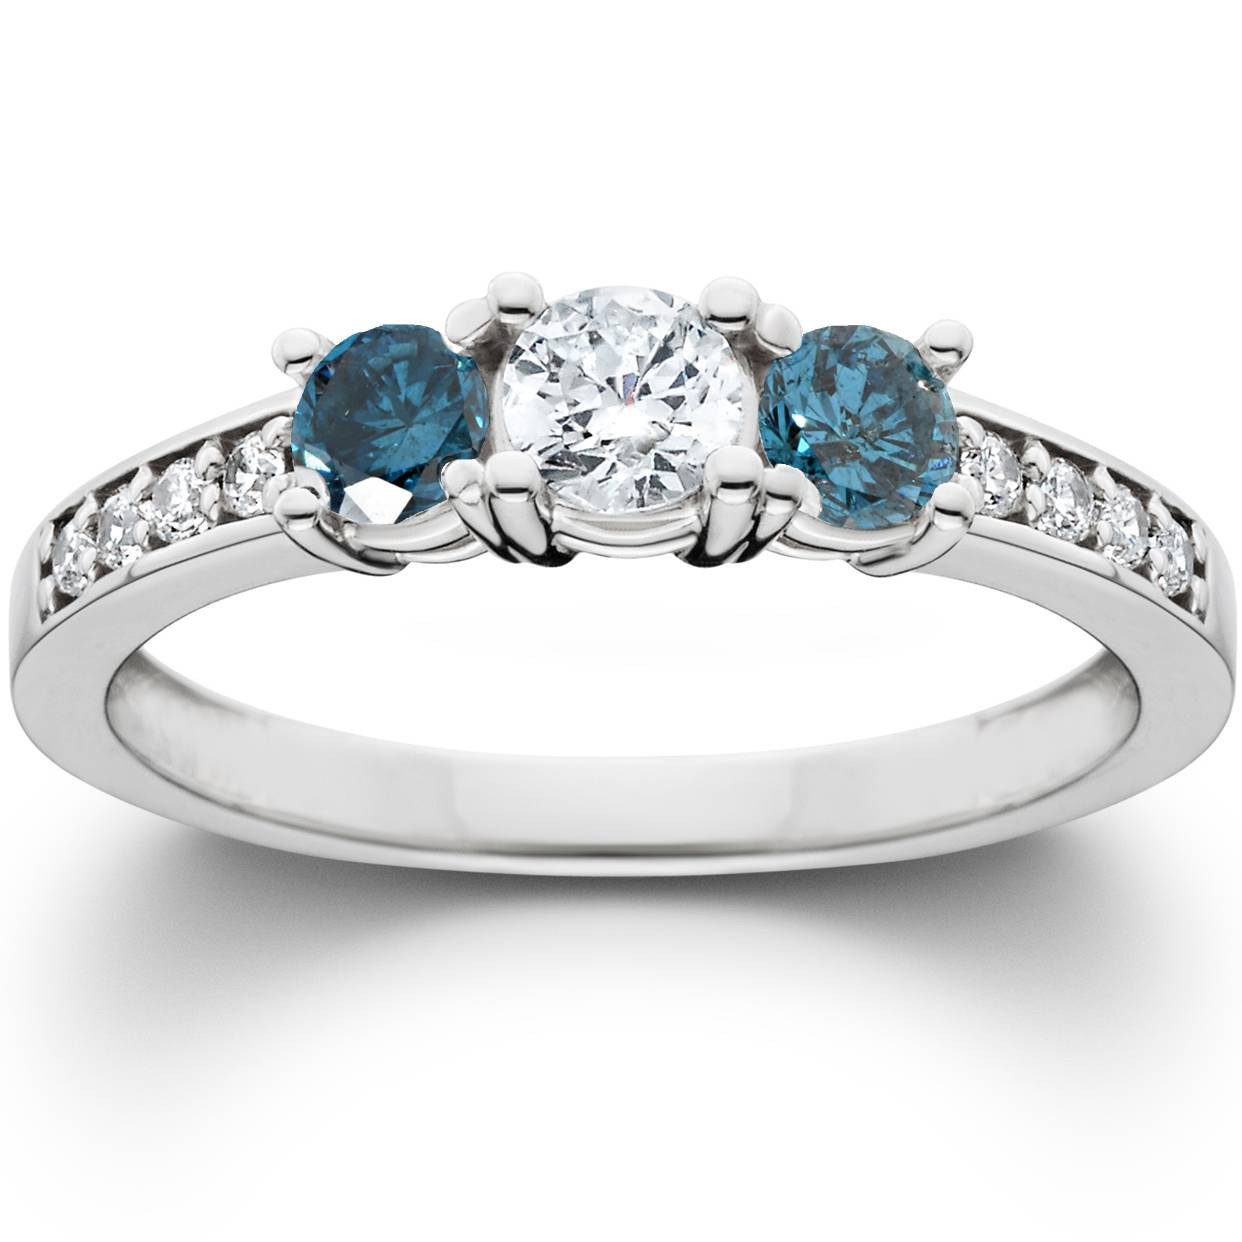 Blue Diamond Engagement Rings
 1ct Treated Blue Diamond 3 Stone Engagement Ring 14K White